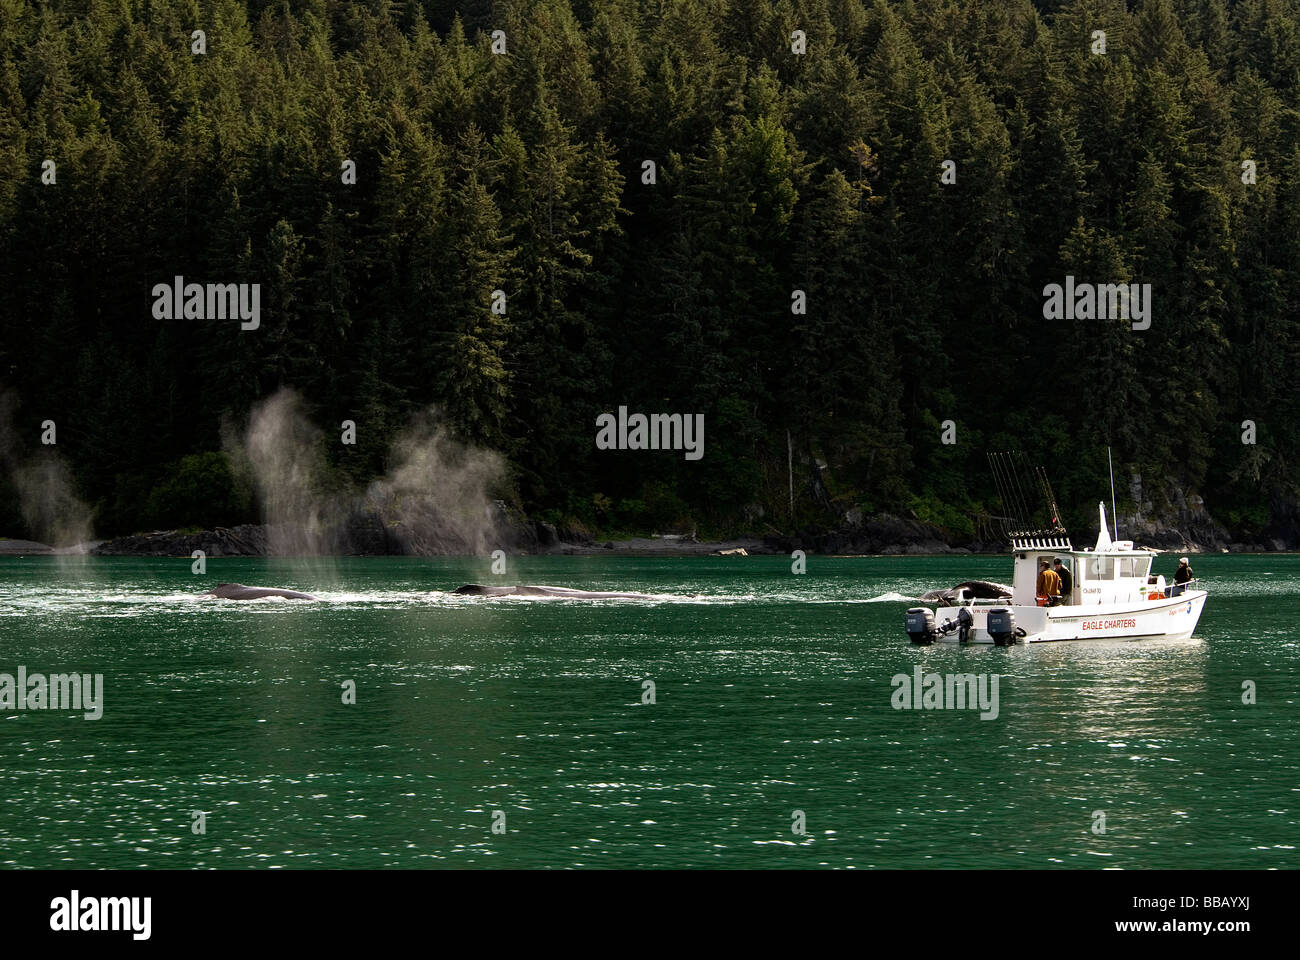 Buckelwale Schläge und Angeln Boot Impressionen Novaeangliae Point Adolphus Alaska USA Stockfoto